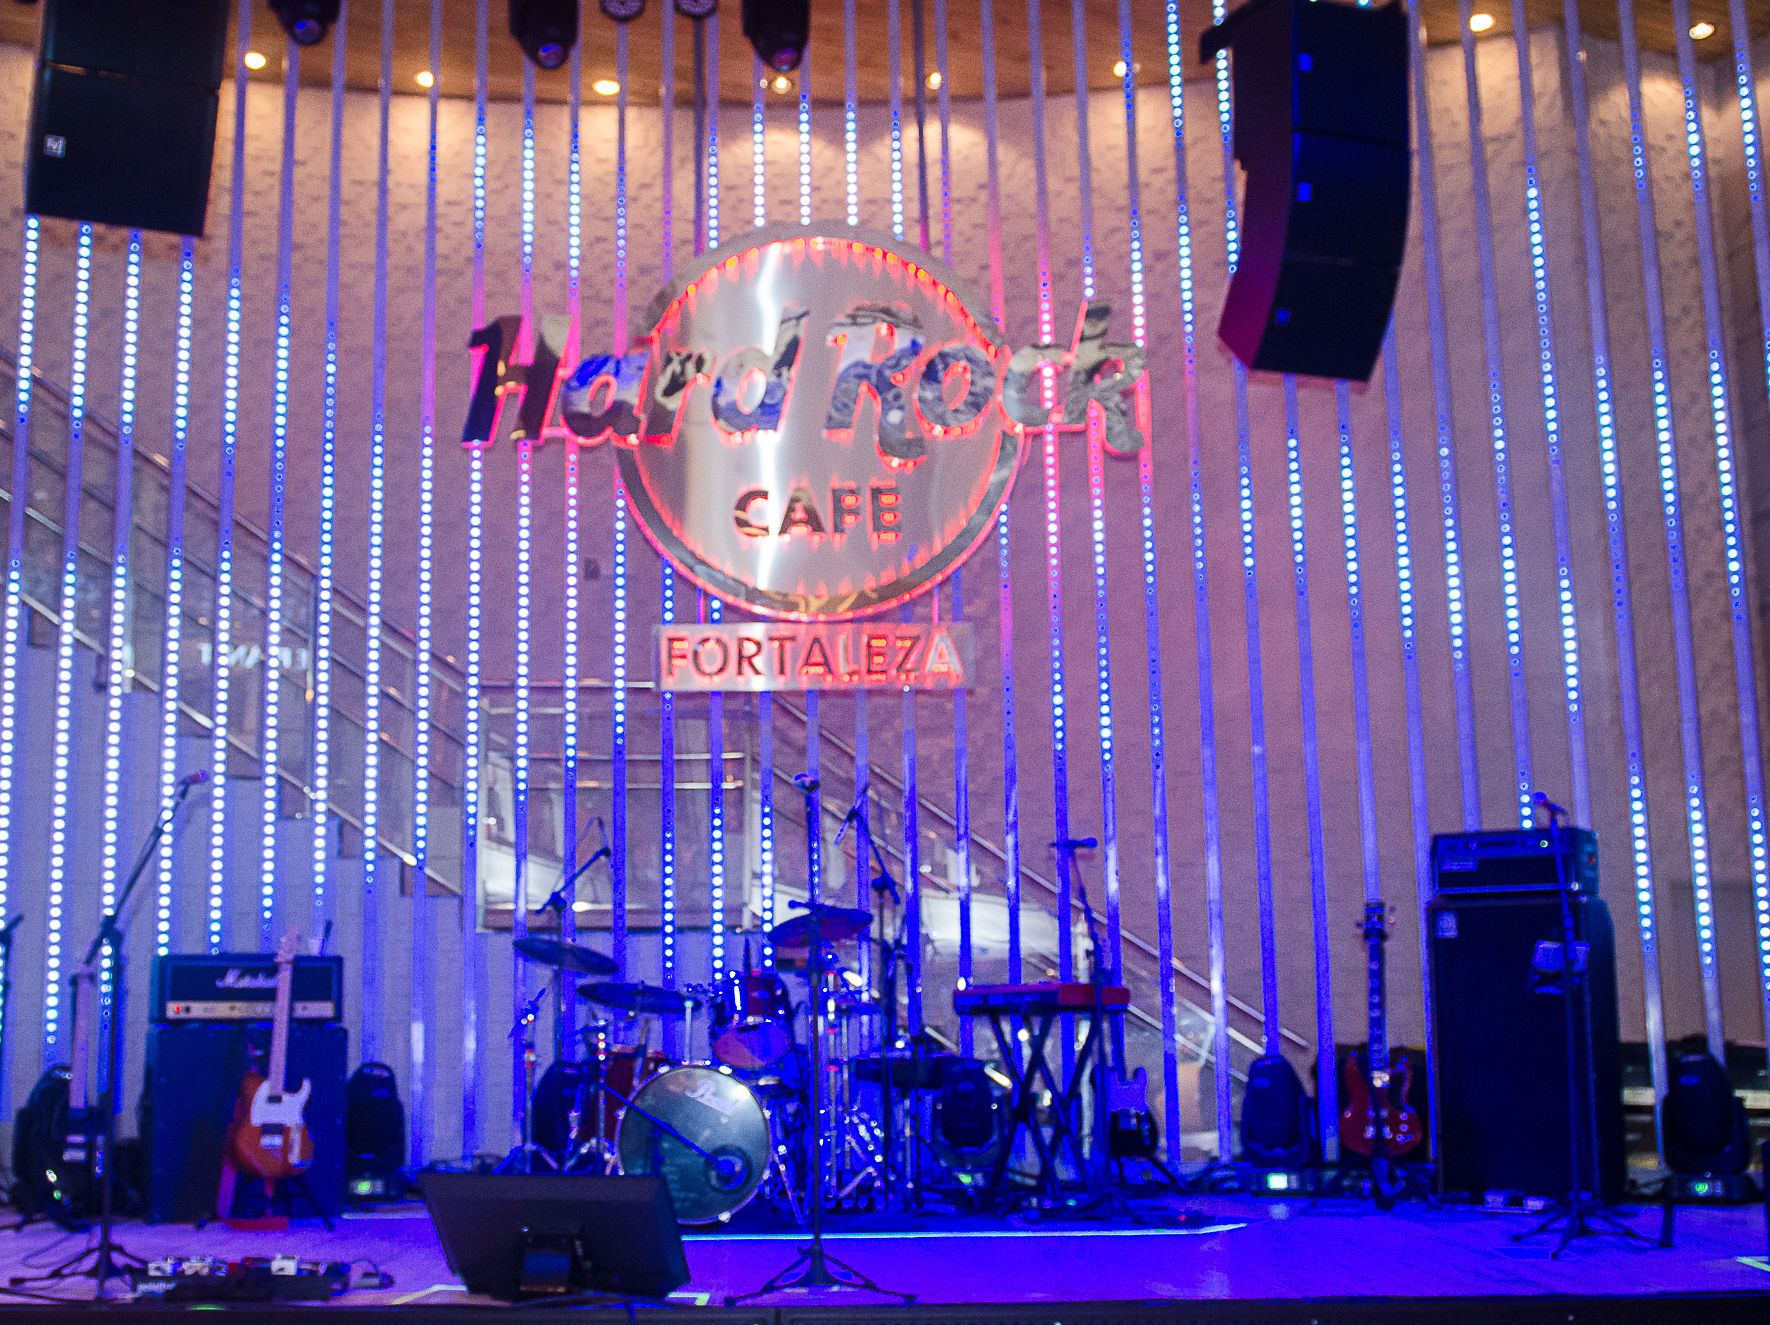 Hard Rock Cafe Fortaleza celebra Independence Day com 50% de desconto no combo chopp e hambúrguer